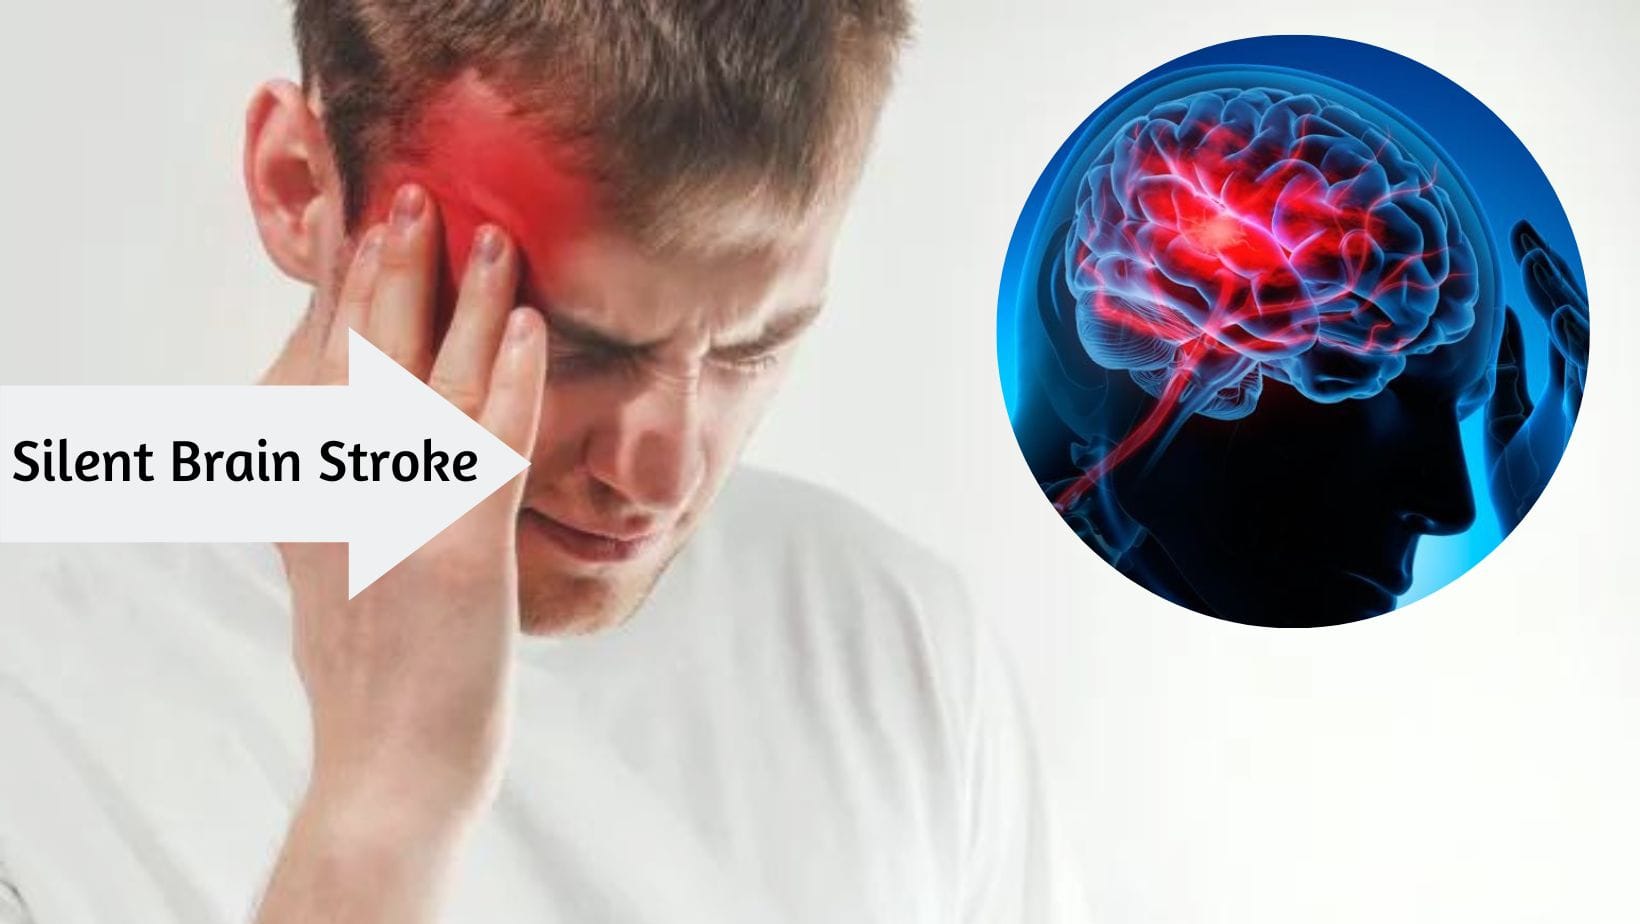 Silent Brain Stroke Symptoms 7 Symptoms You Should Never Ignore